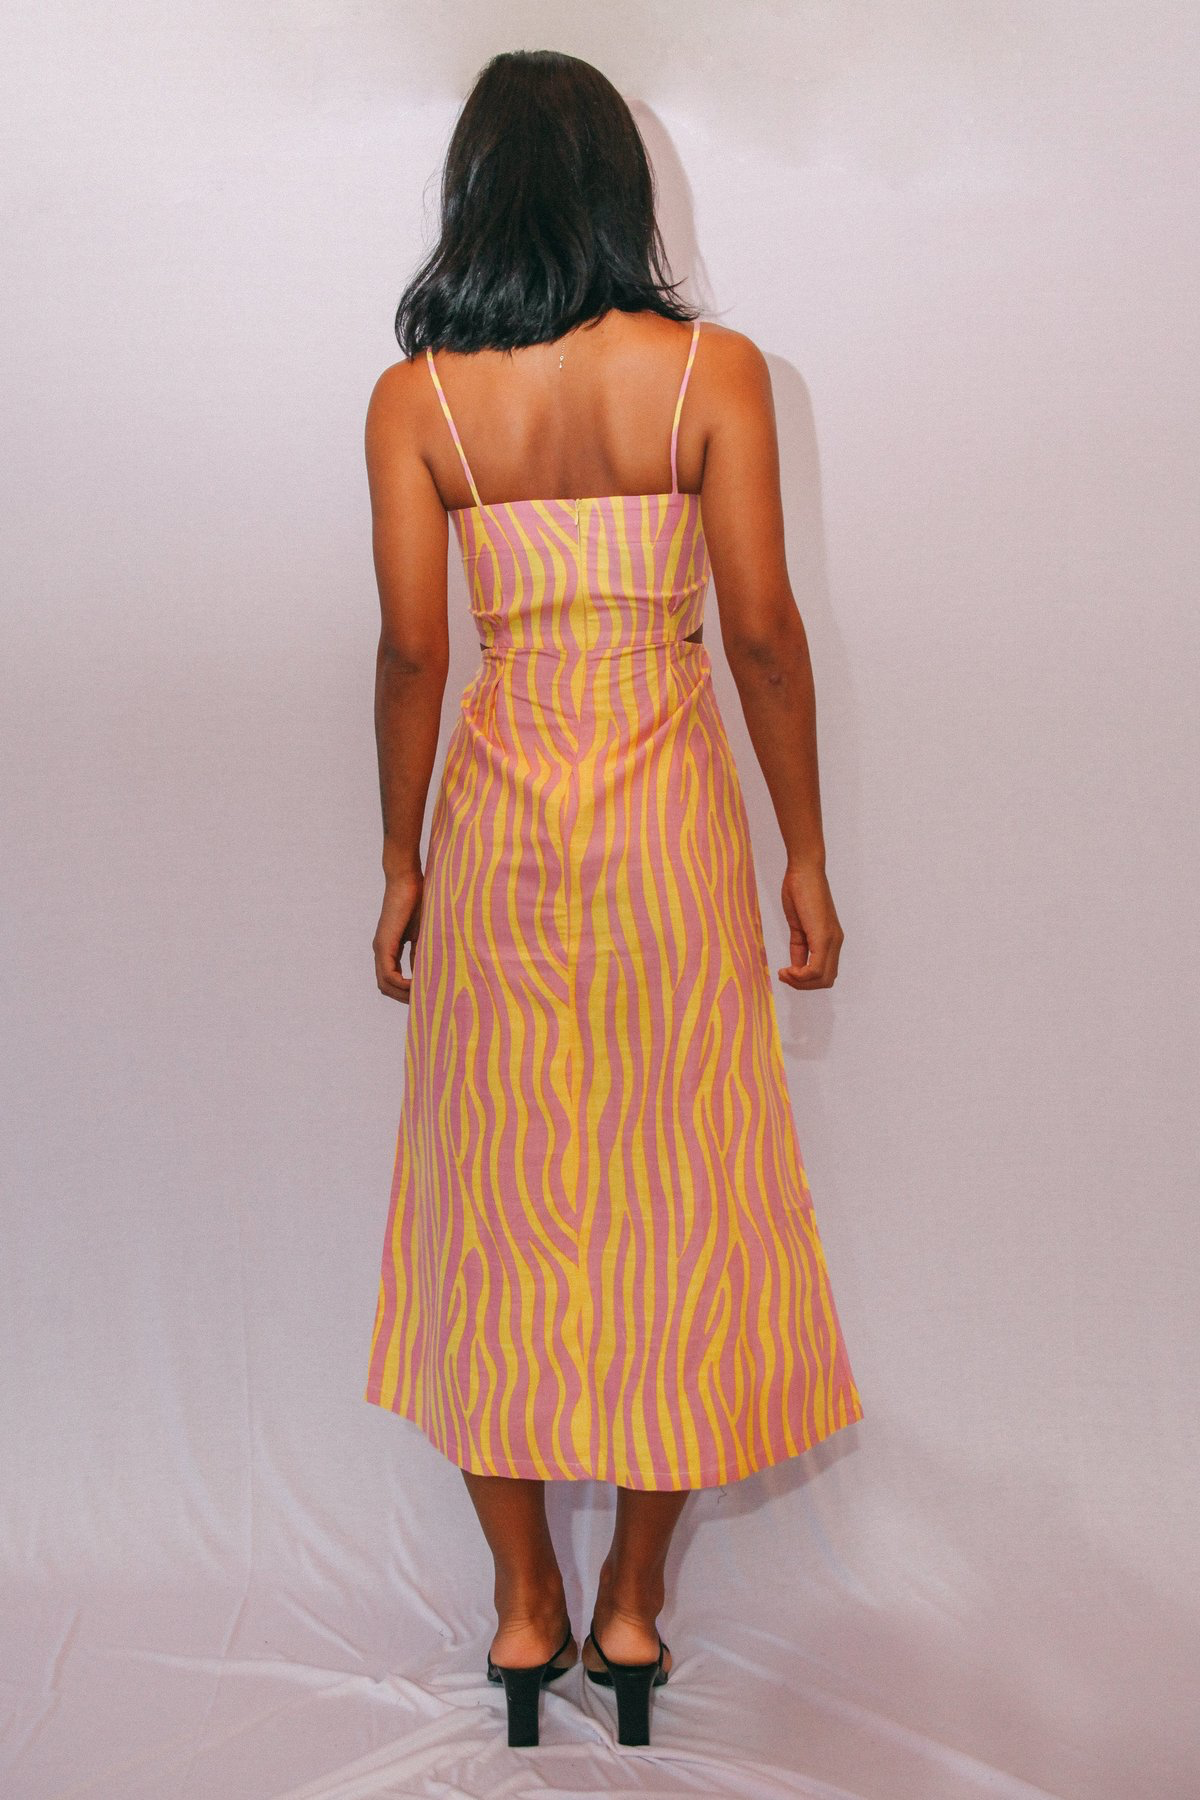 Stain Sol Dress in Lemonade, available in ZERRIN